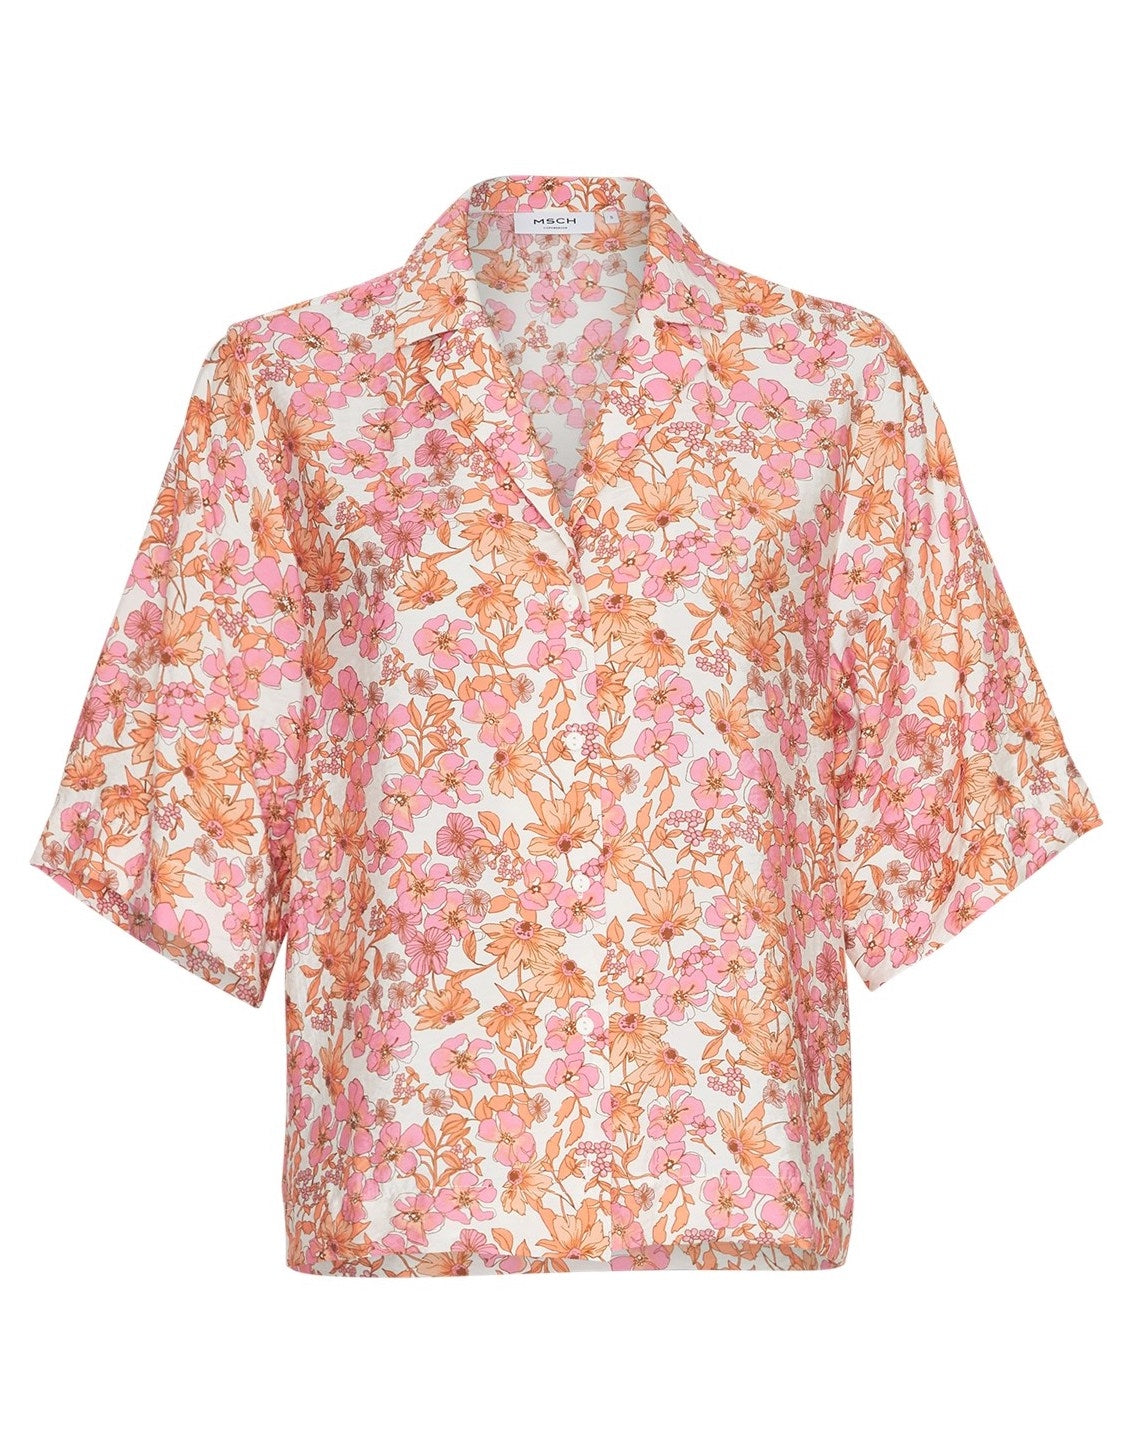 Adanaya Ladonna 2/4 Shirt A PINK FLOWER